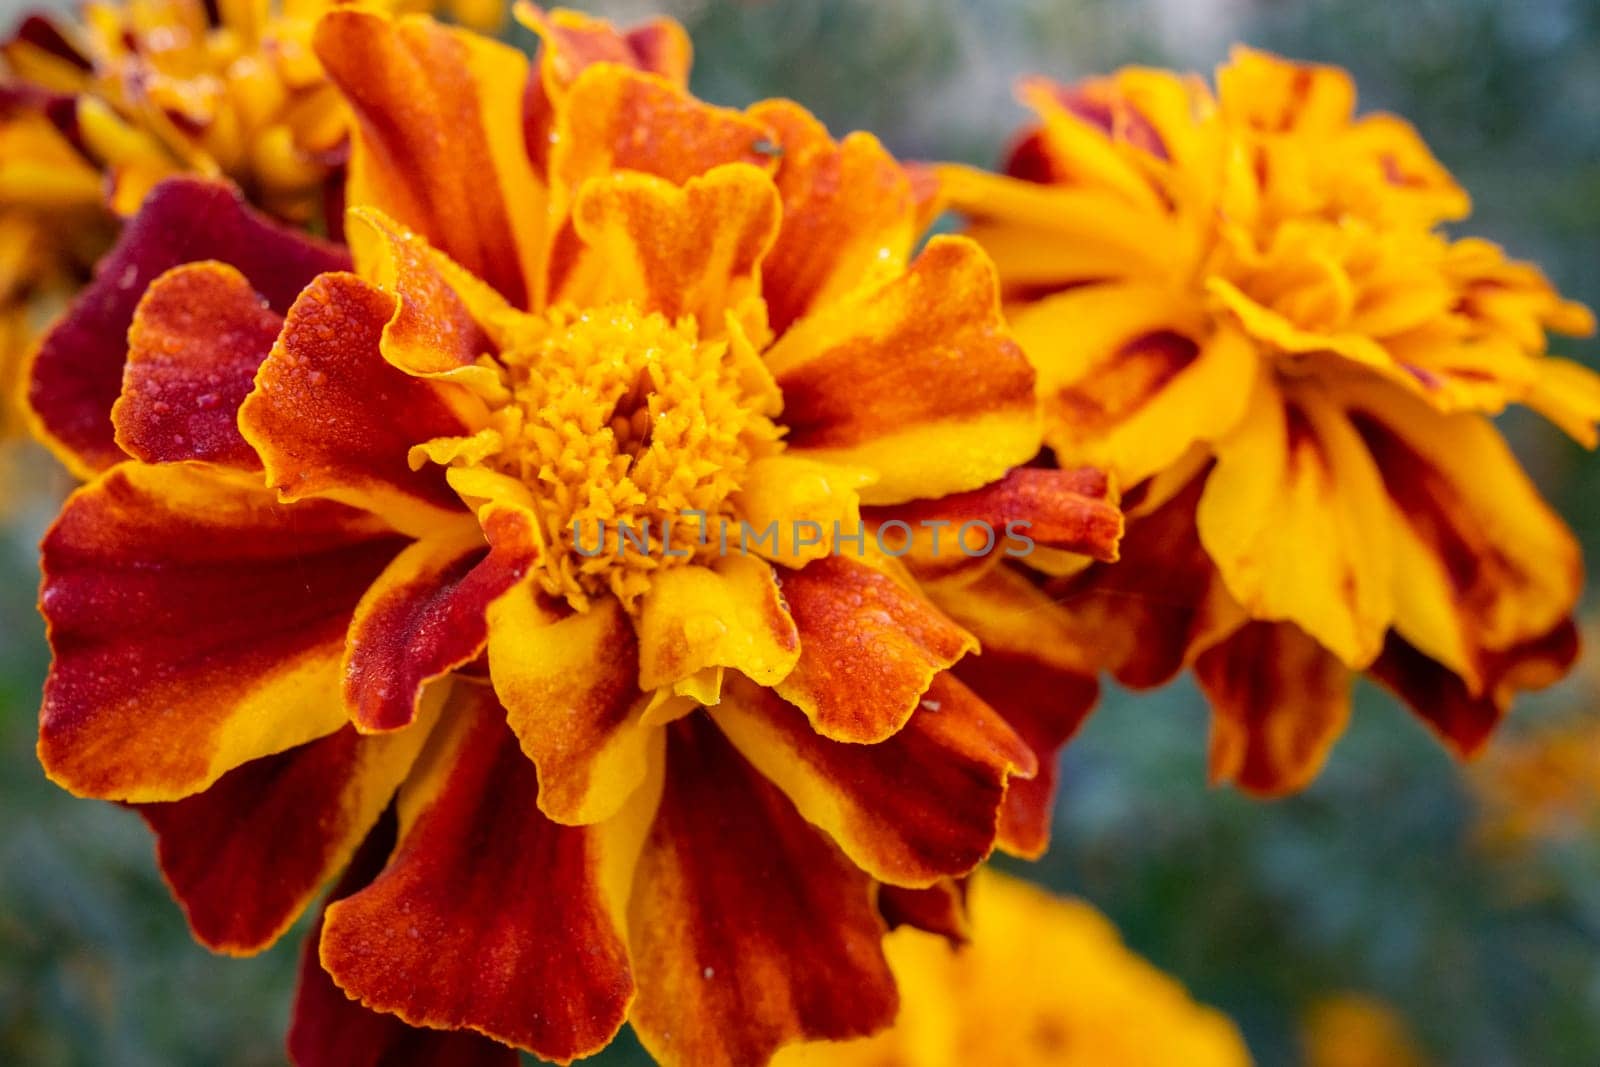 Two large marigolds close-up. Soft focus by Serhii_Voroshchuk